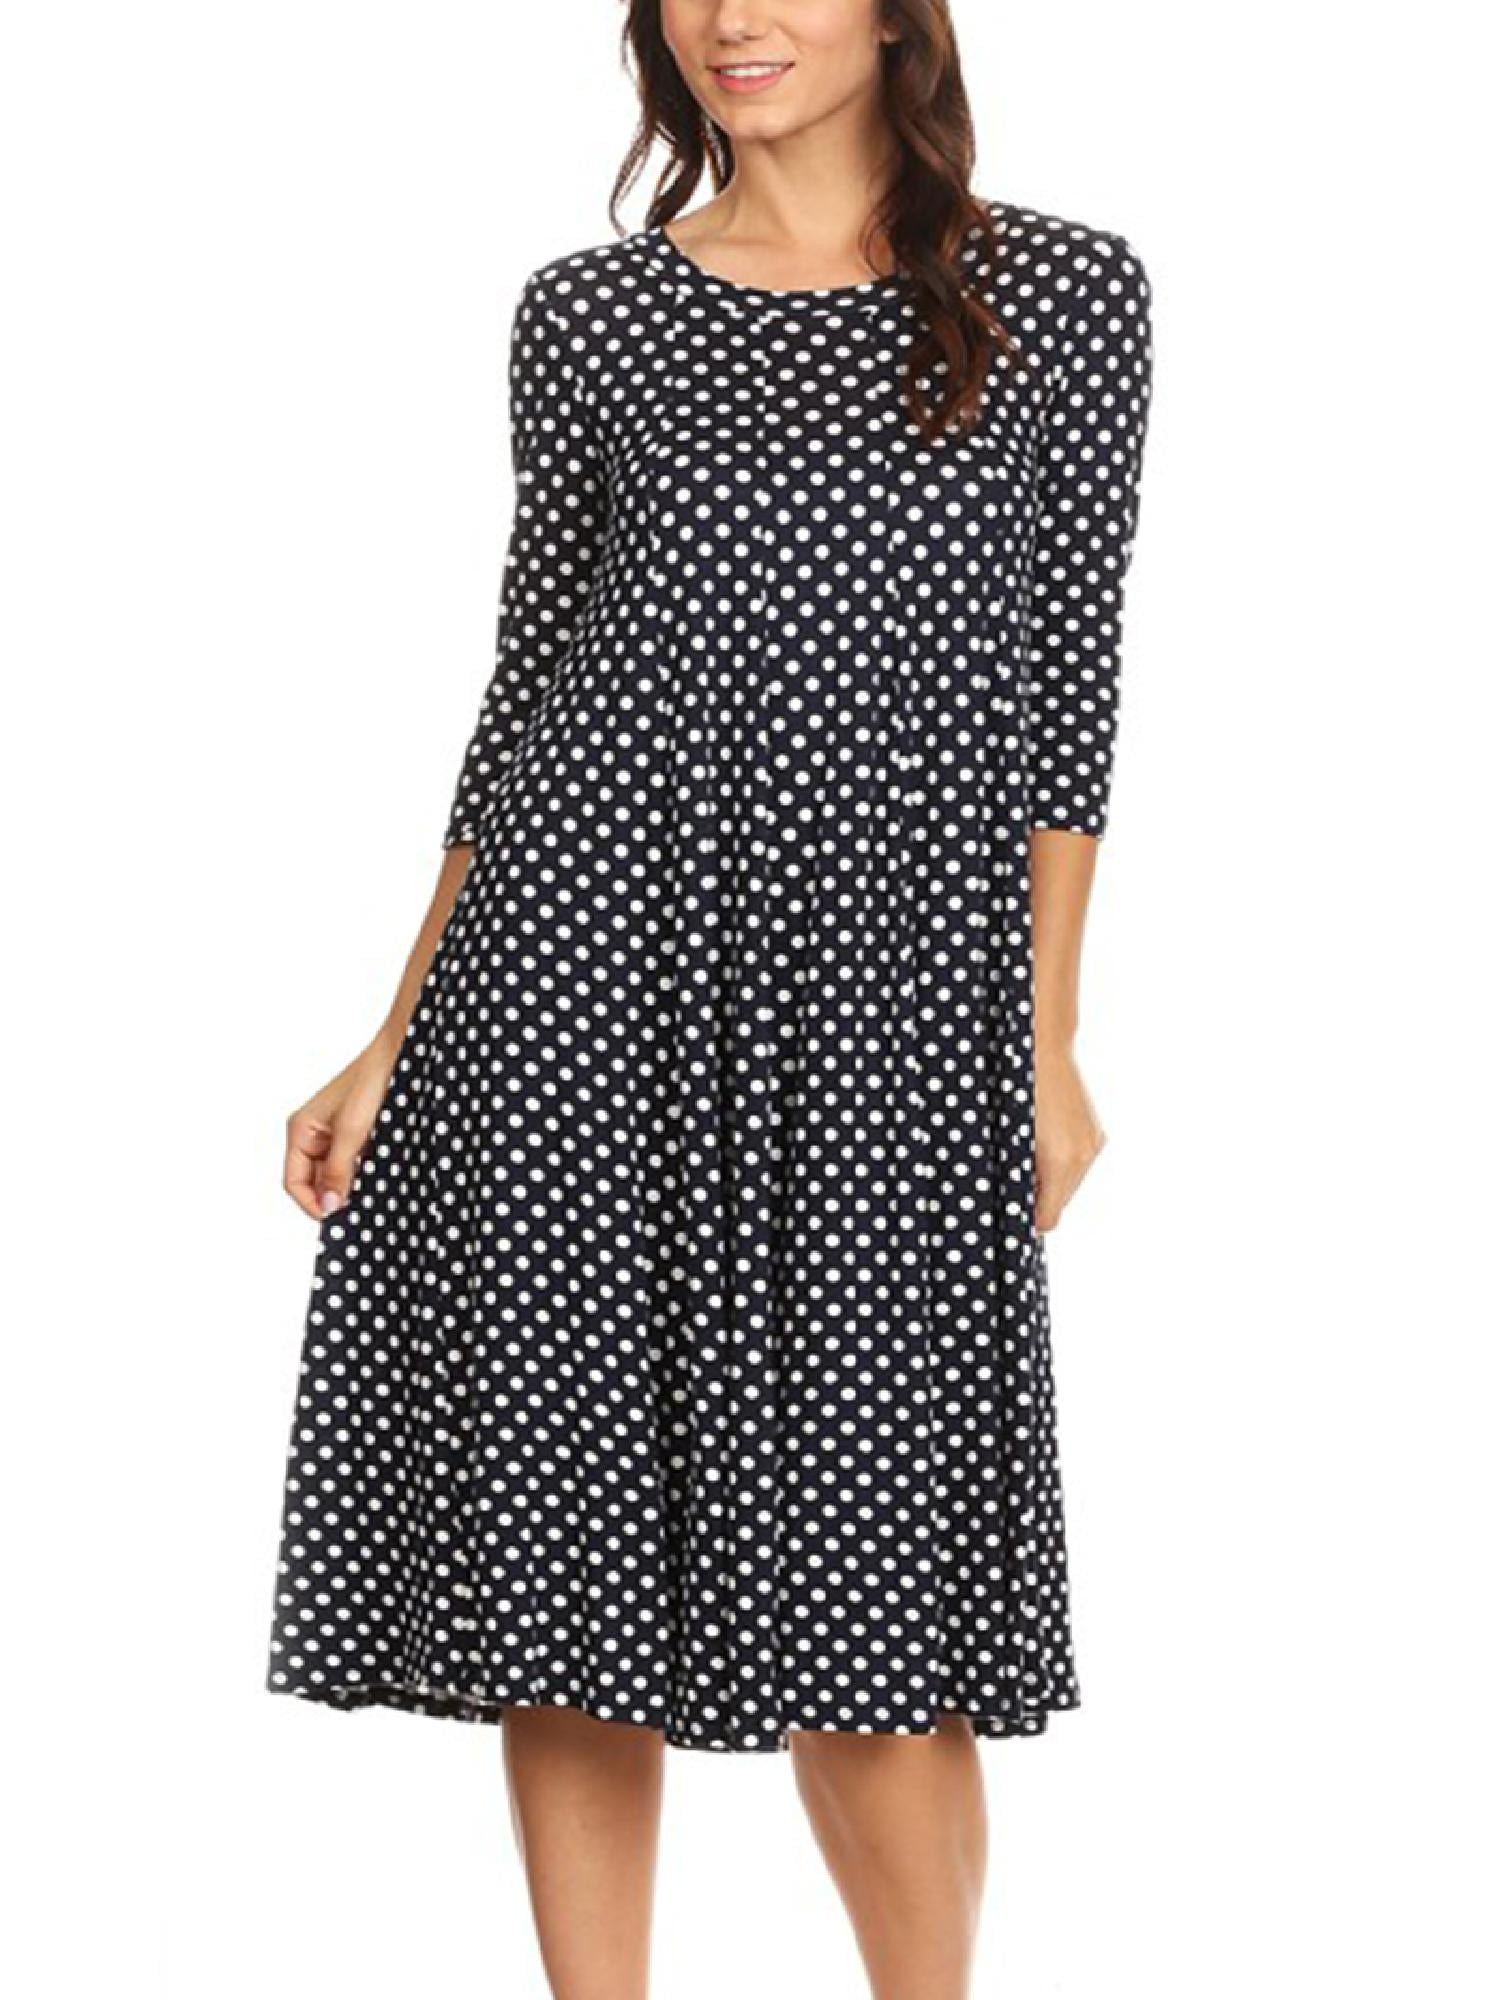 Women's trendy style 3/4 sleeve polka dot print midi dress. - Walmart.com